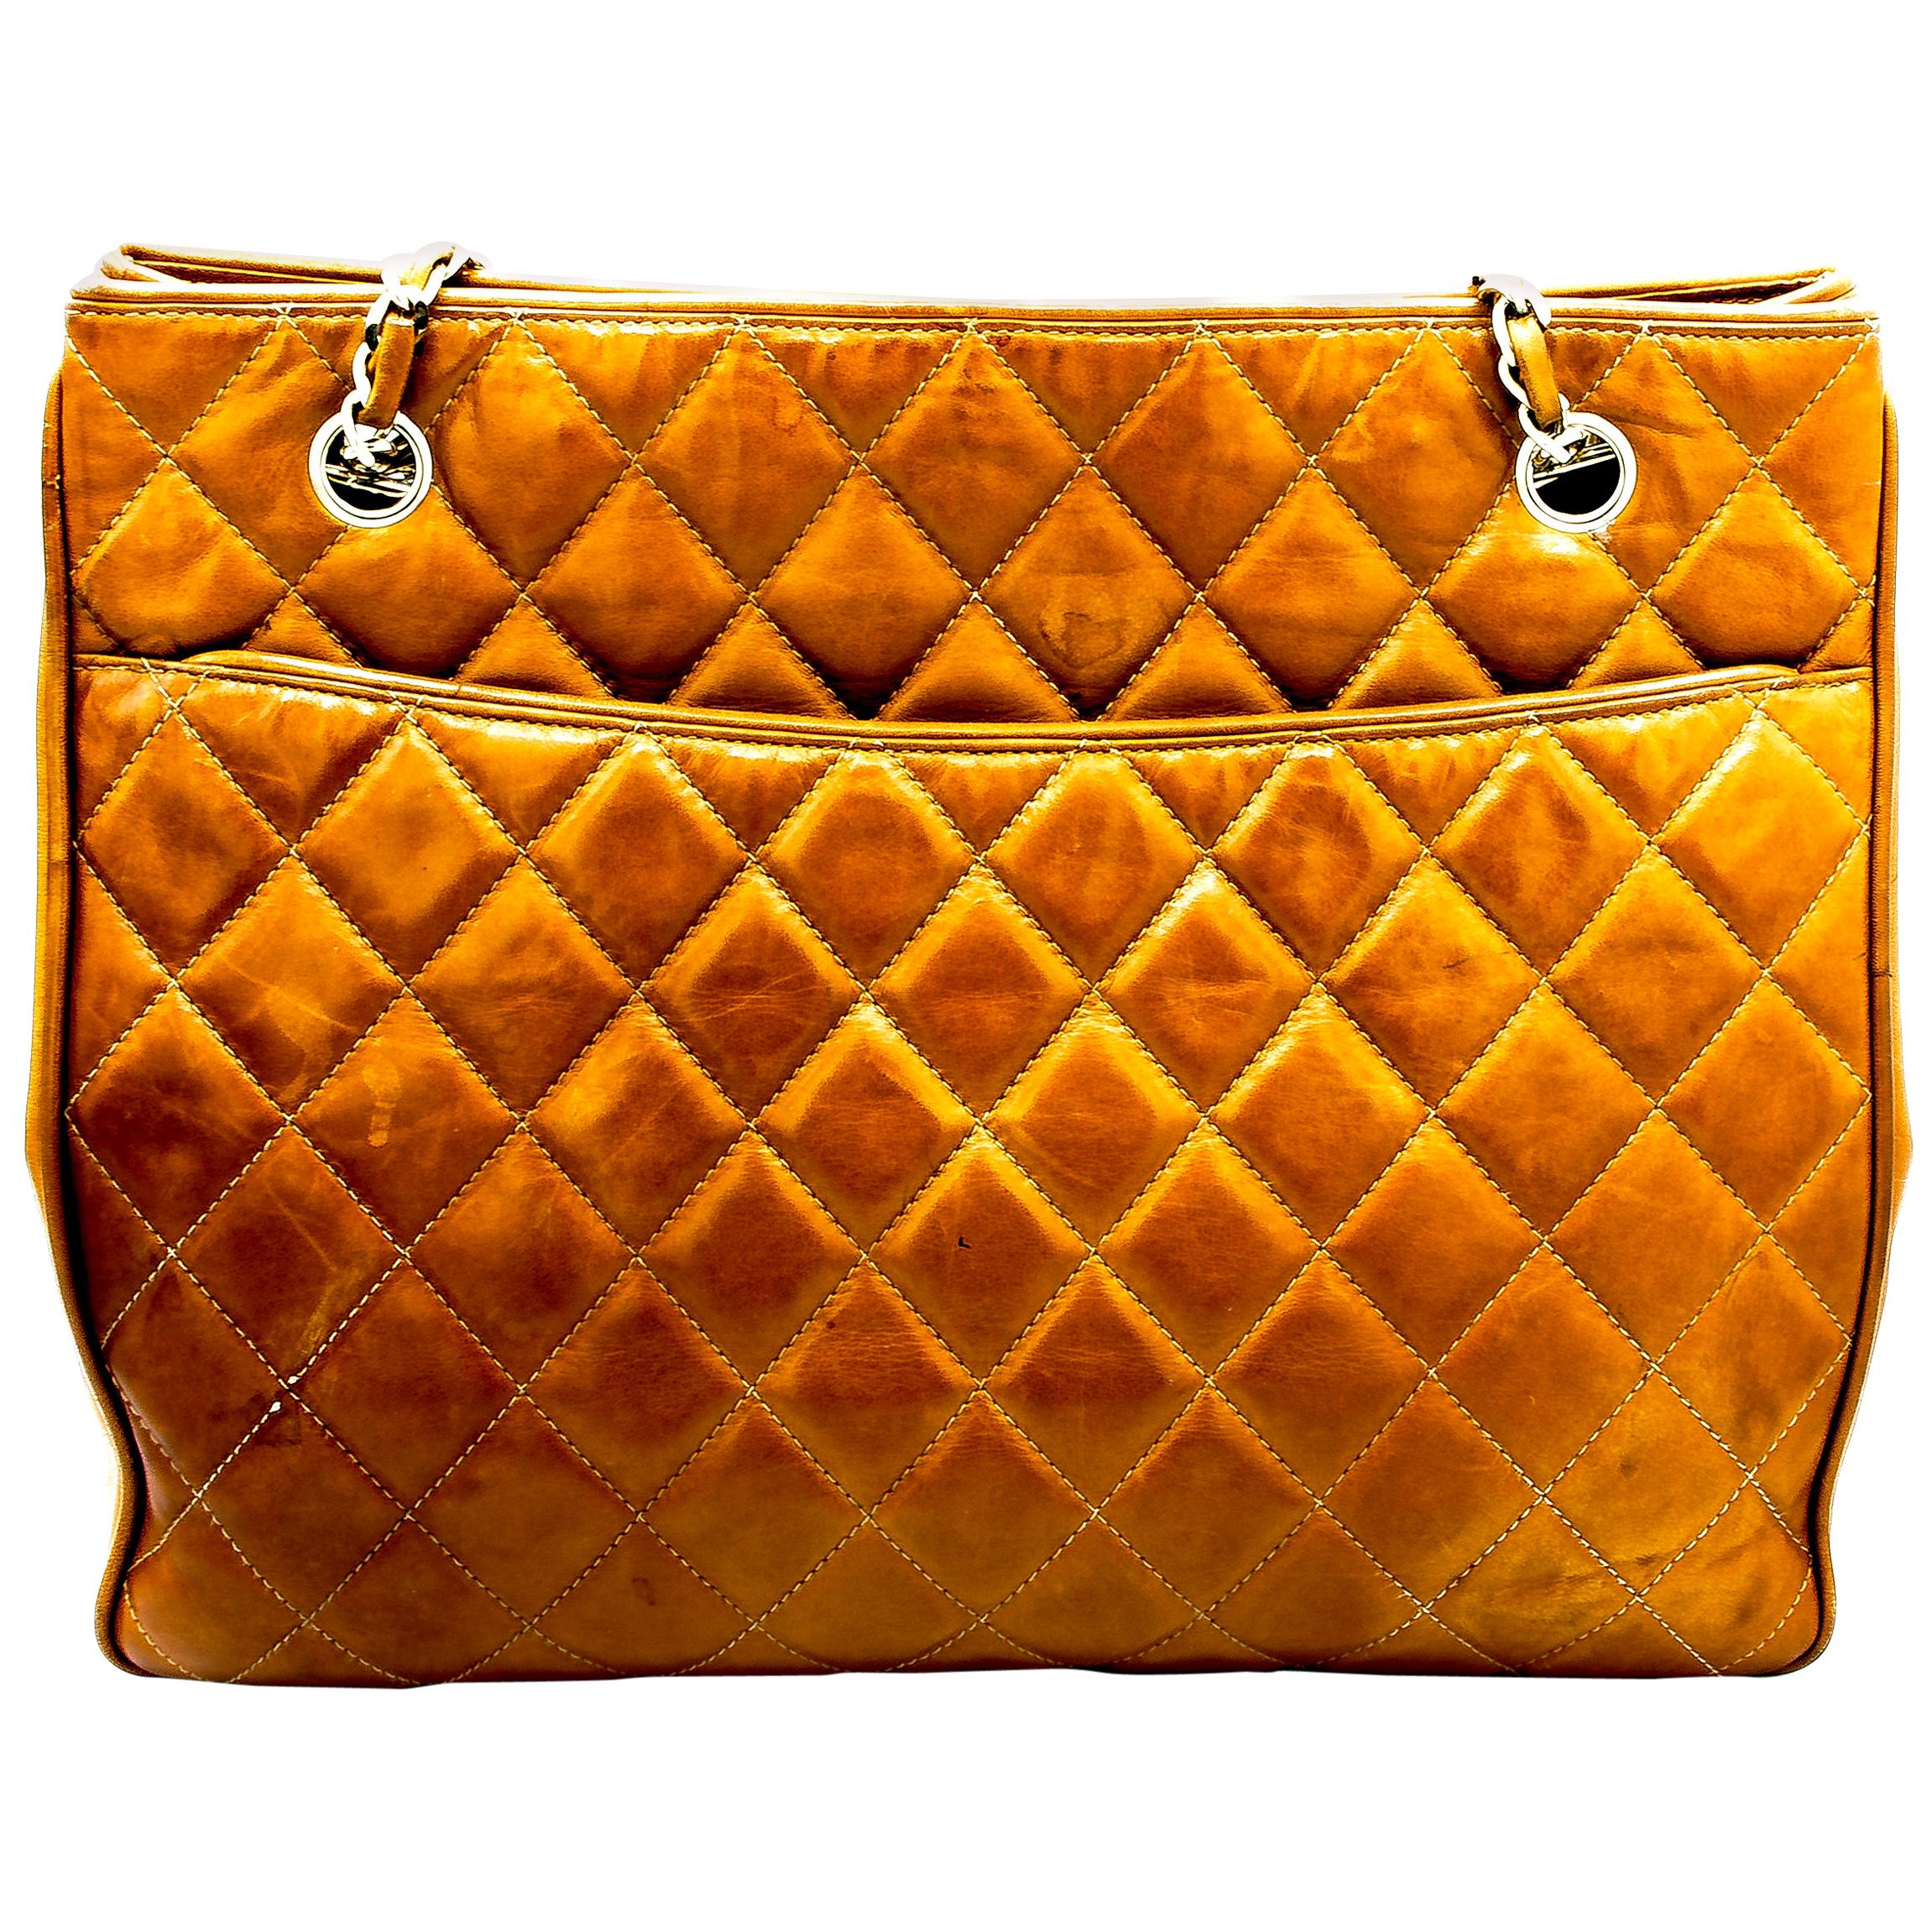 Chestnut Vintage Chanel Handbag